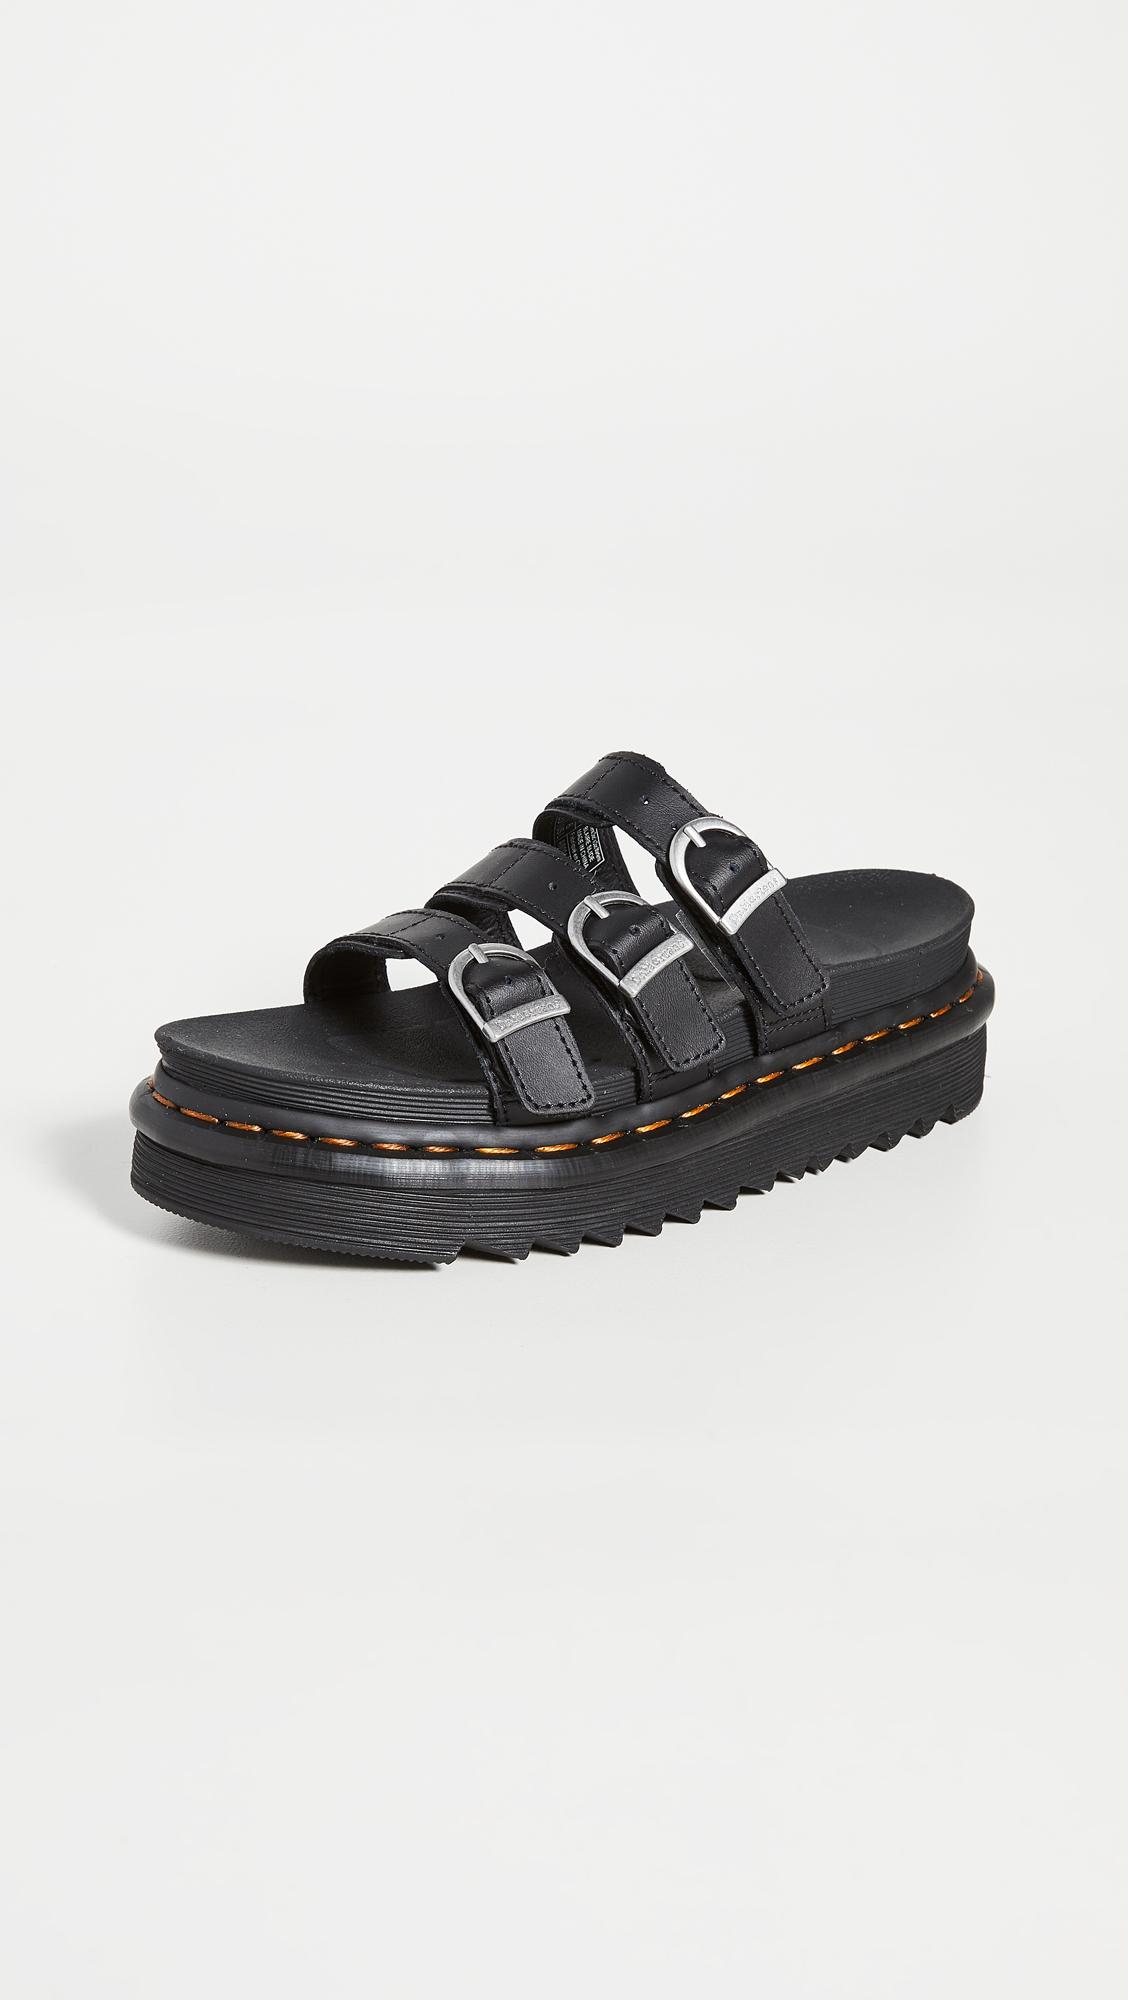 Dr. Martens Leather Blaire Slide Sandals in Black - Lyst